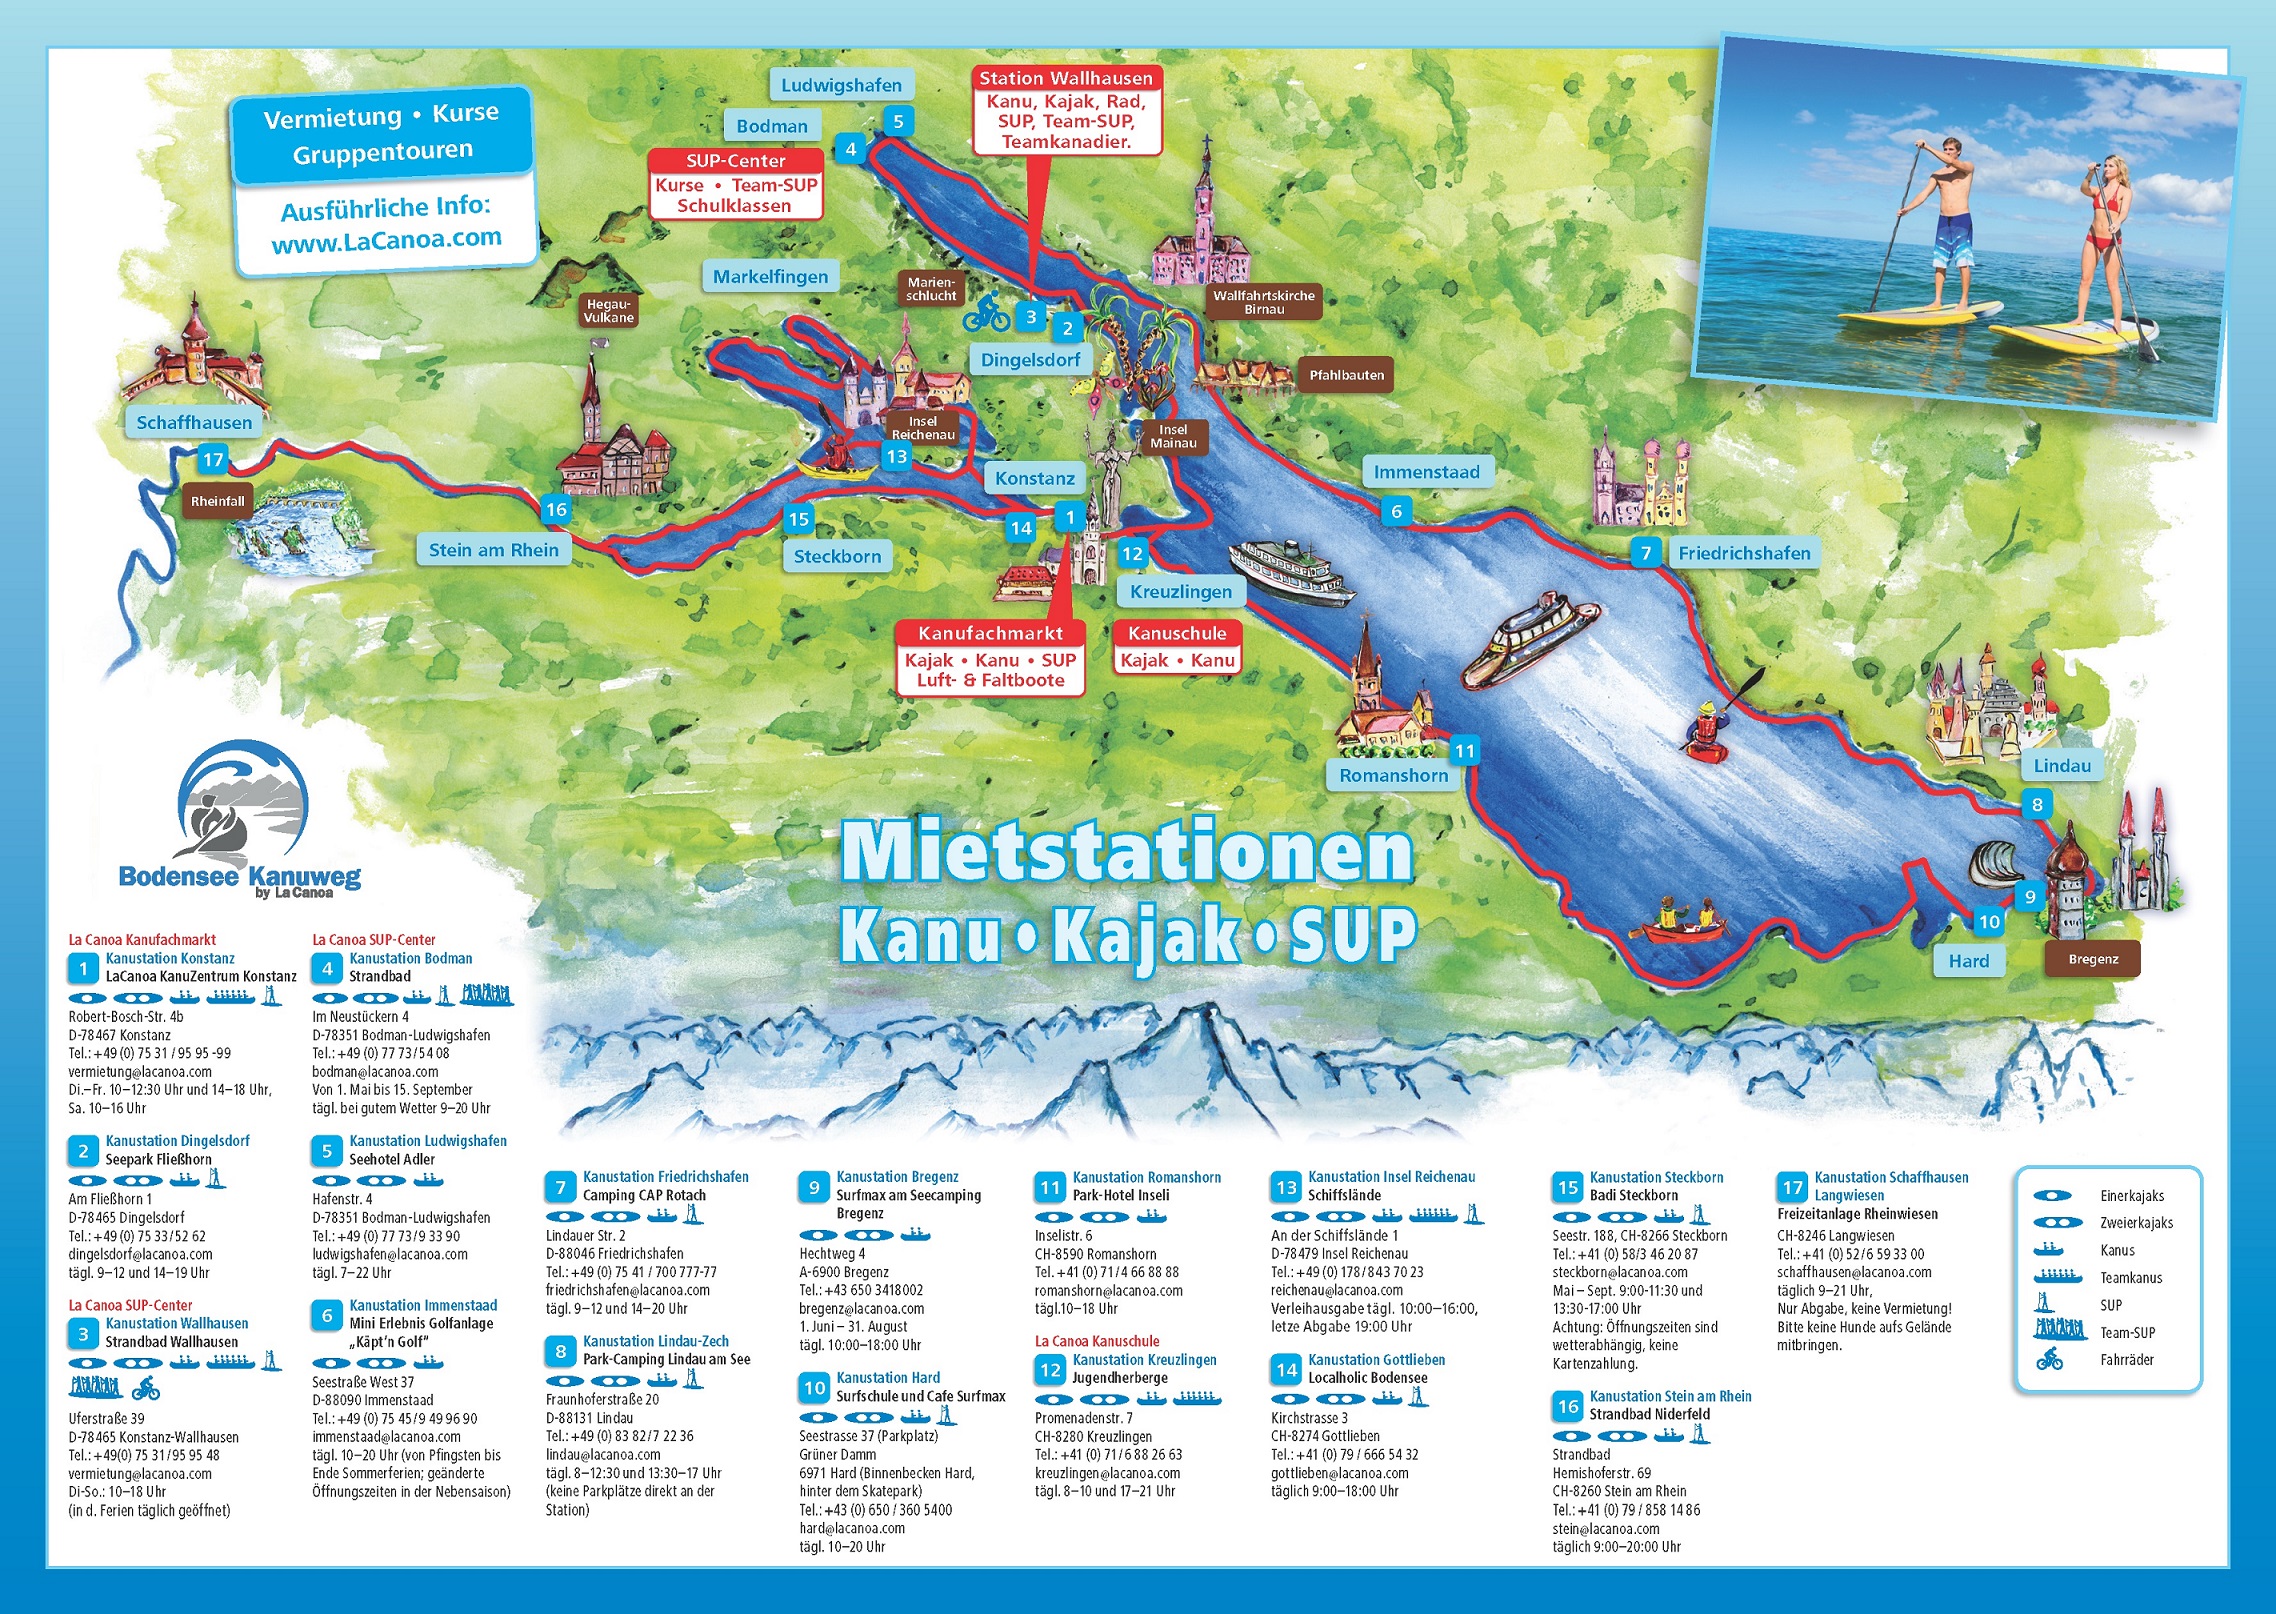 Bodensee-Kanuweg-Mietstationen